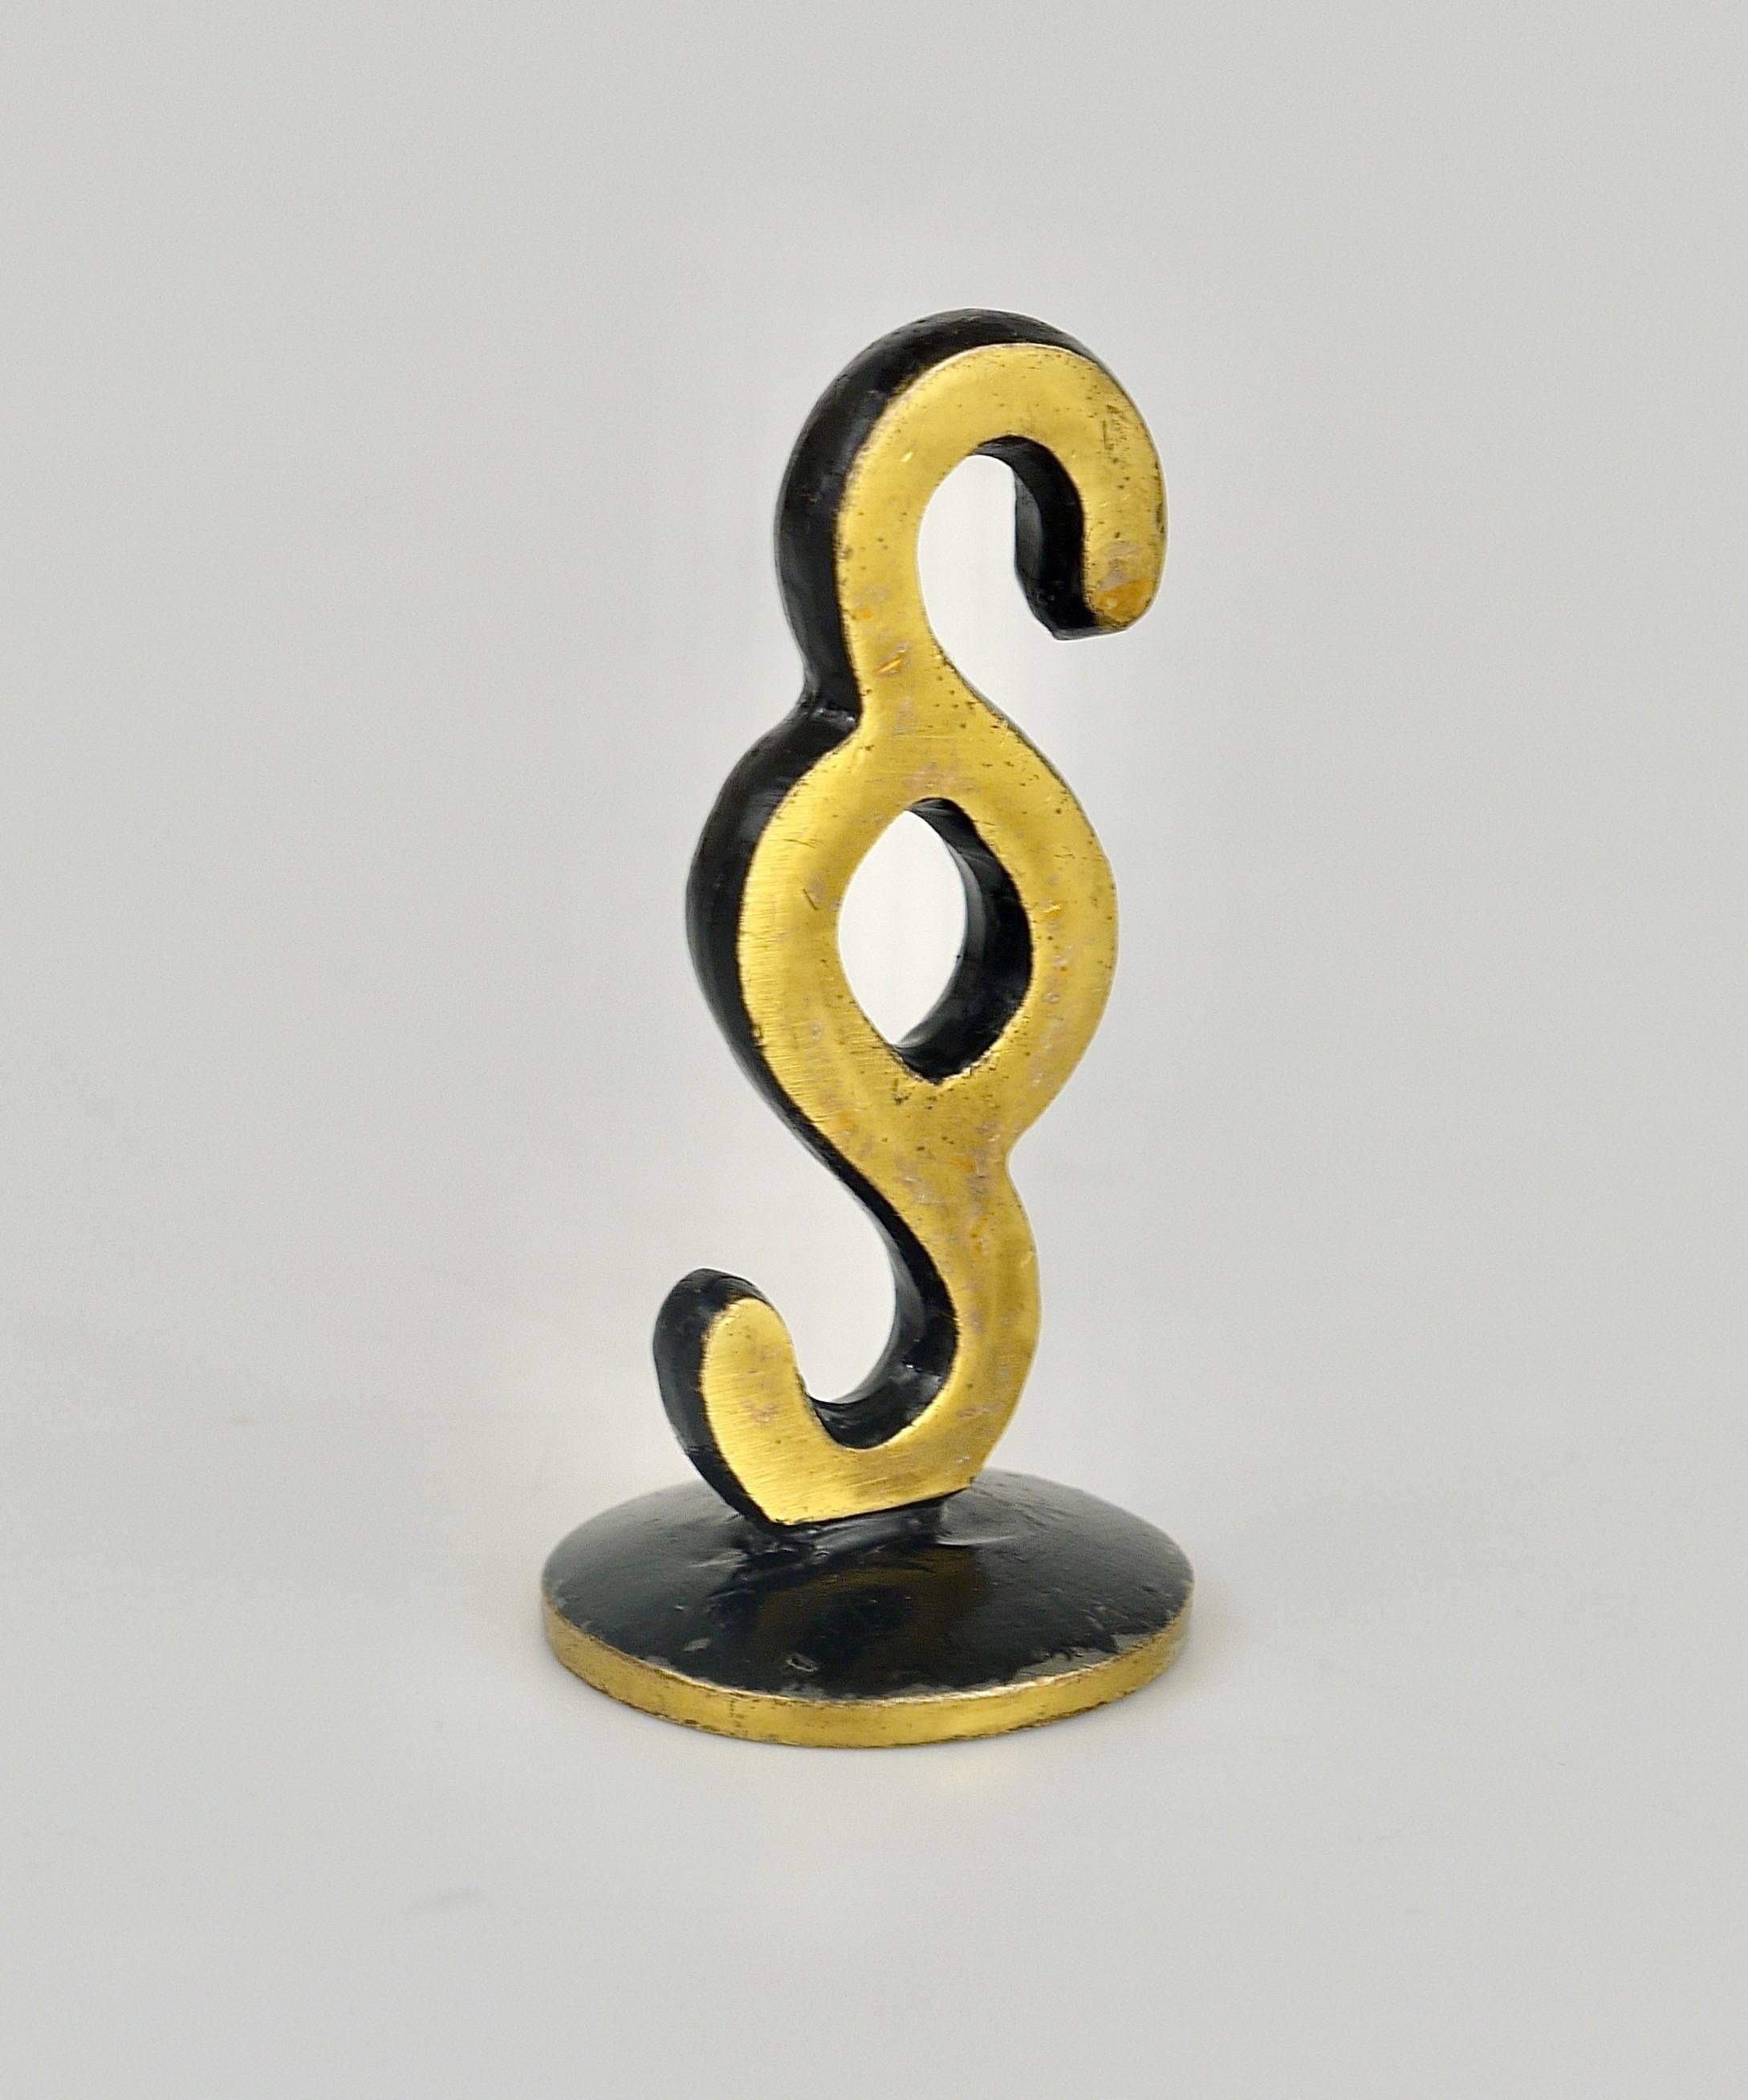 Walter Bosse Paragraph Lawyer Brass Sculpture, Herta Baller, Austria, 1950s In Good Condition For Sale In Vienna, AT